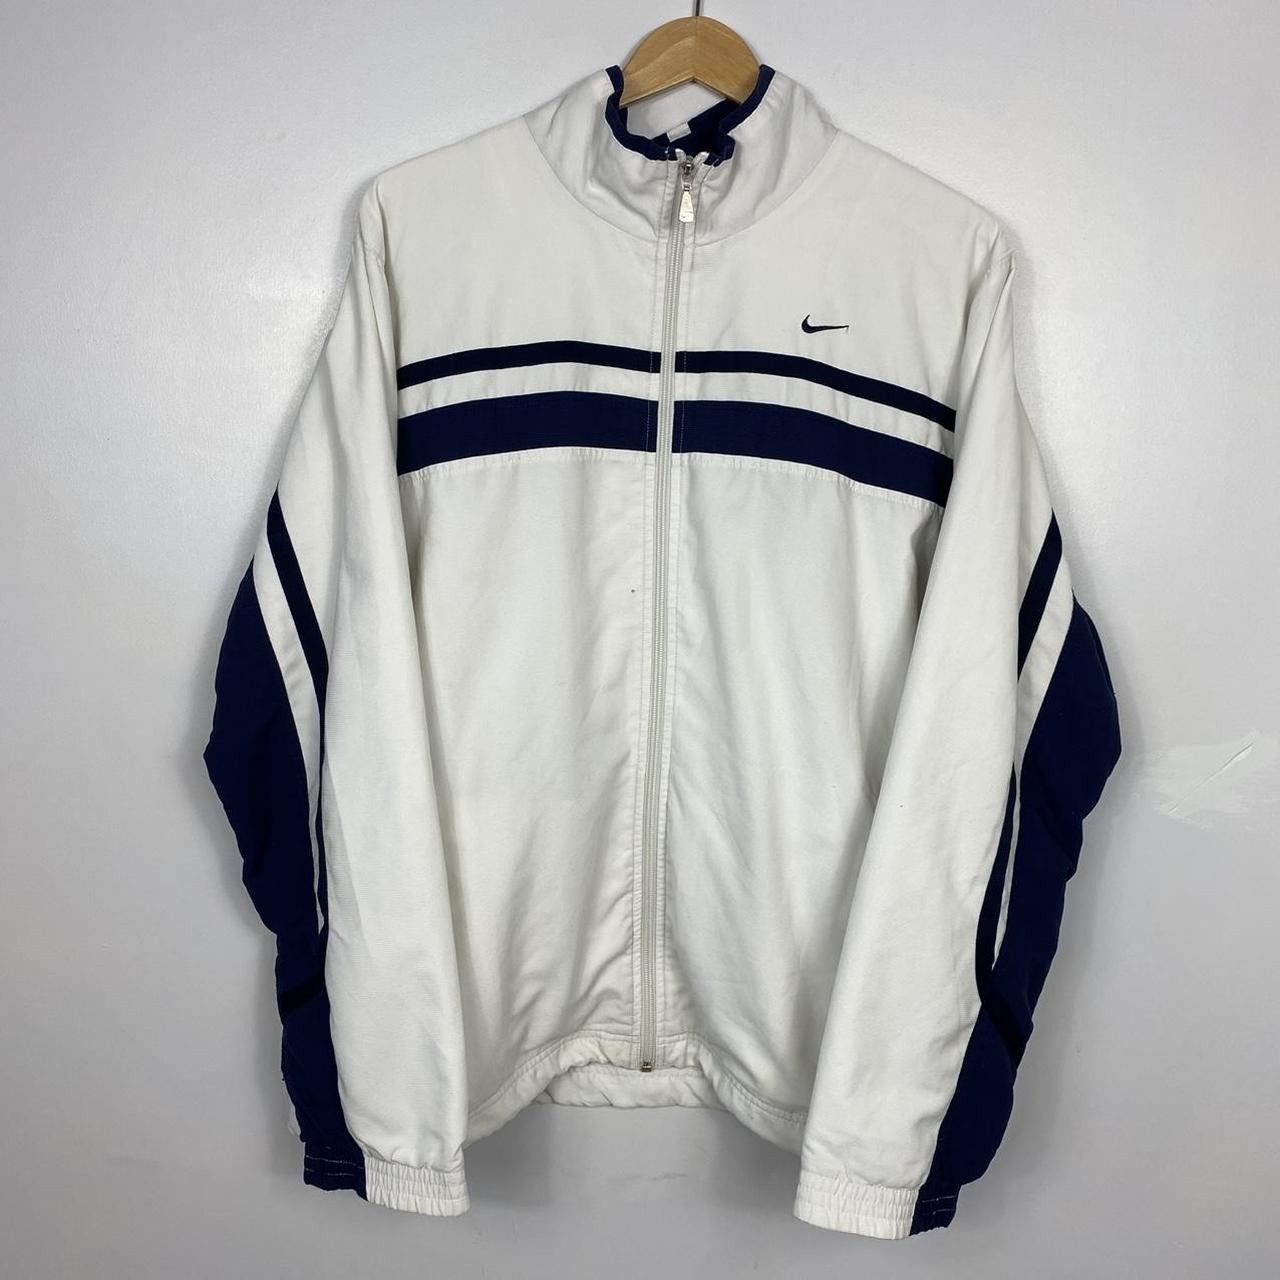 Nike Men's White and Navy Jacket | Depop